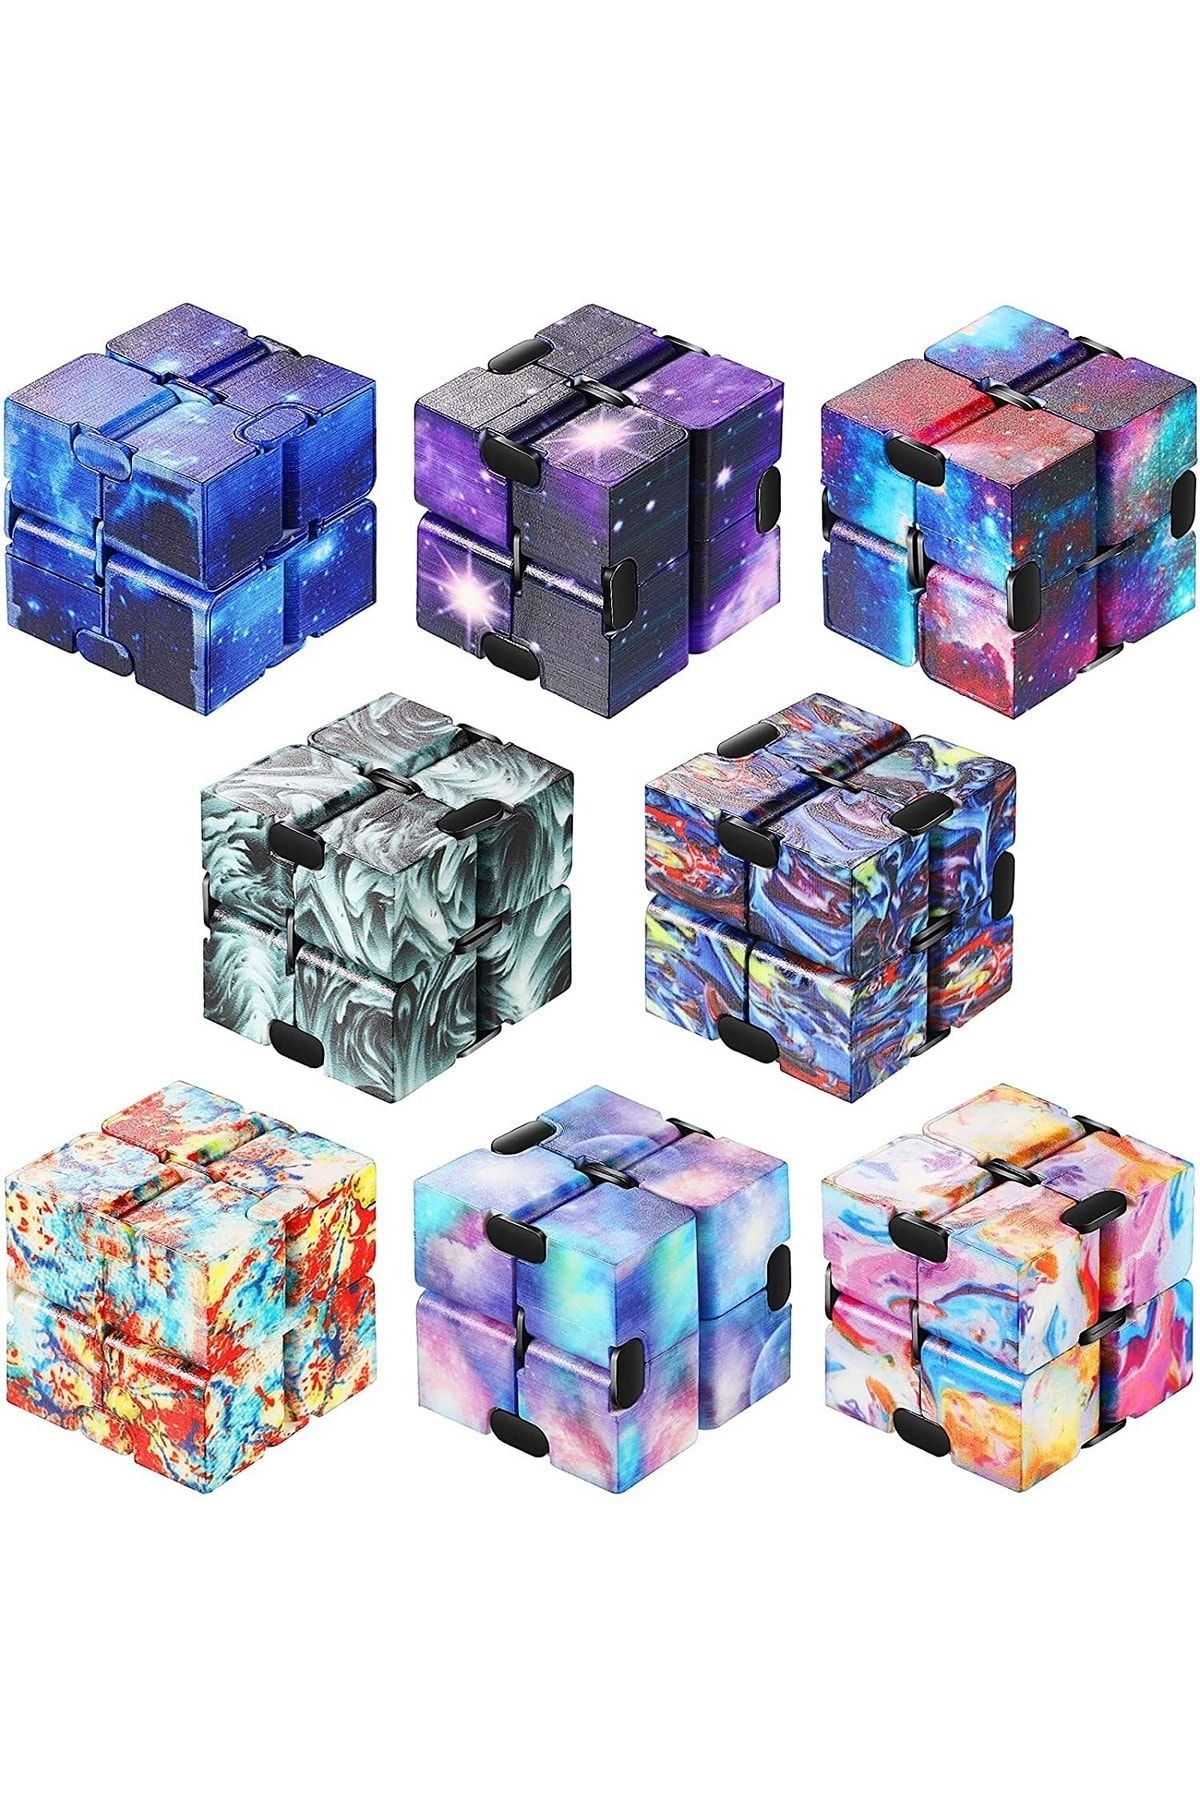 e-life shop Es8948 Infinity Cube Thinkmaster Fidget Grafiti Desenli Stres Küpü Stres Giderici Oyuncak 1 Adet